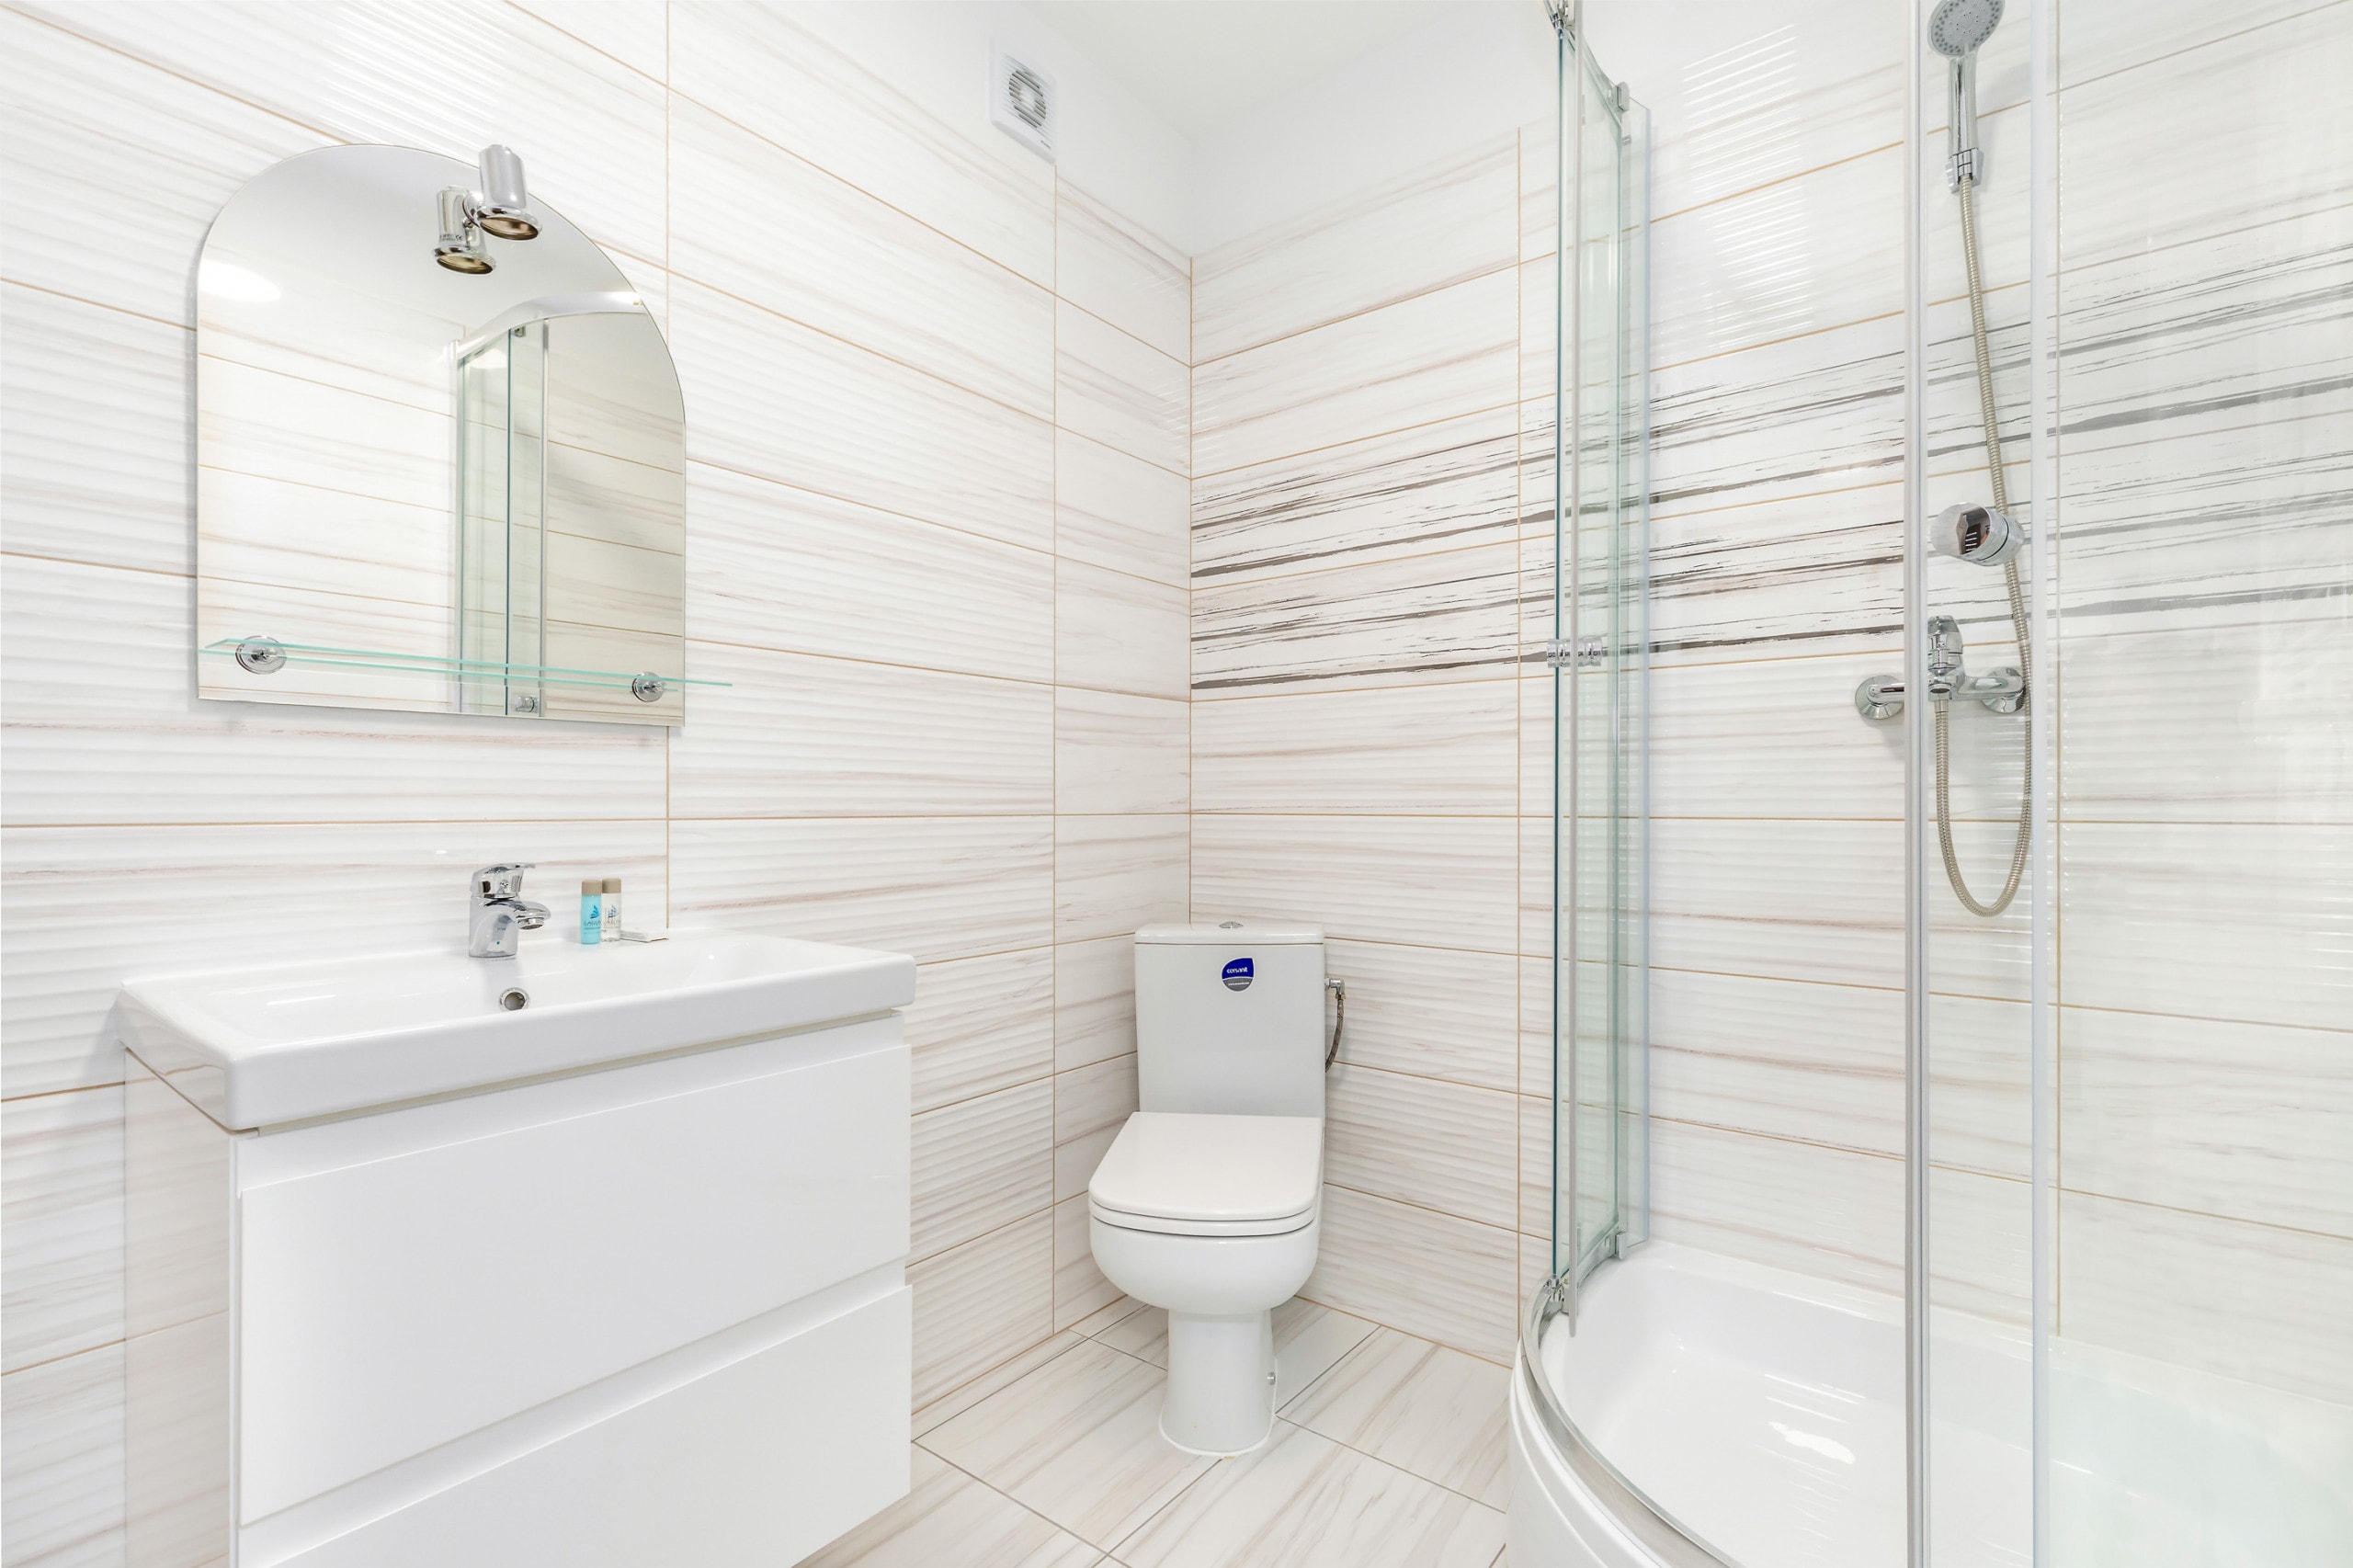 Bathroom of apartment Armii Krajowej 6/21 with shower